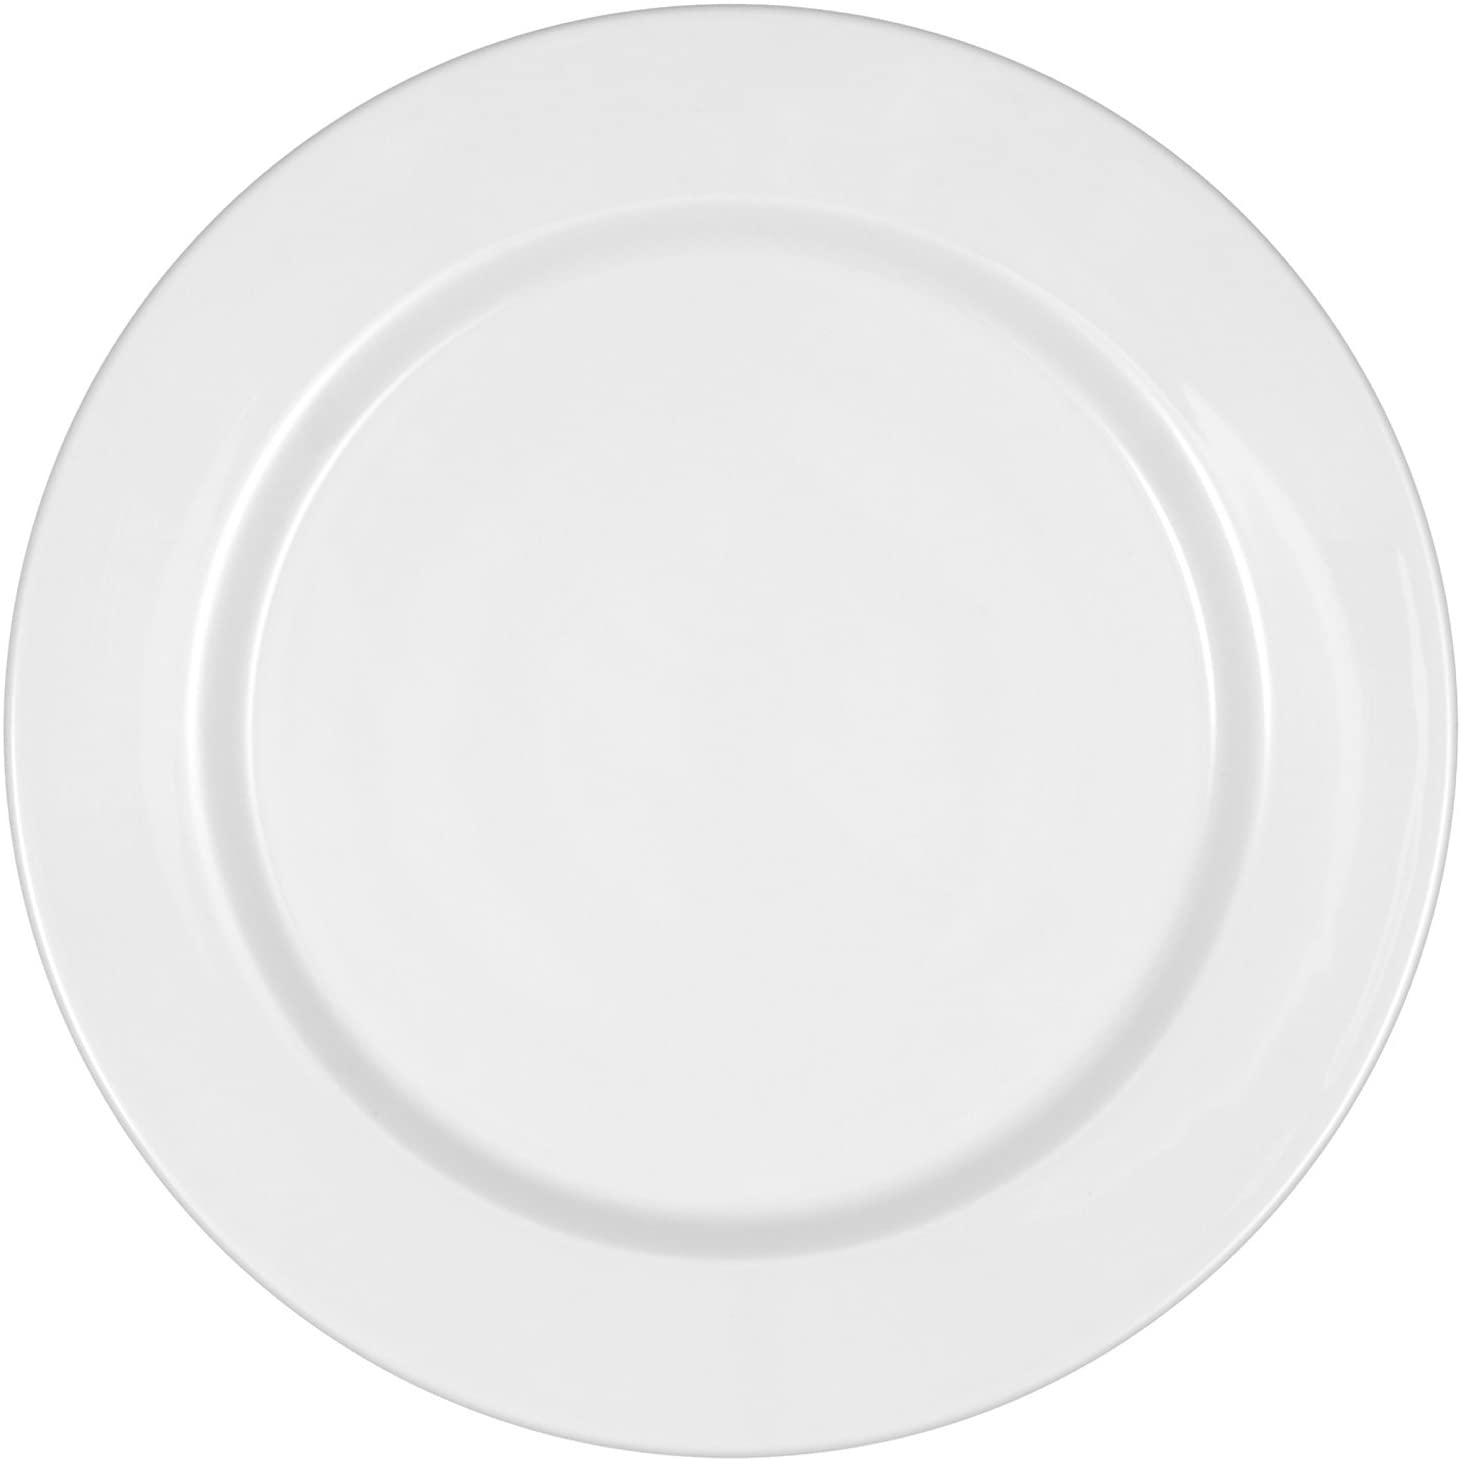 Plate 9 Inch Mandarin White Universal 00006 by Seltmann Weiden